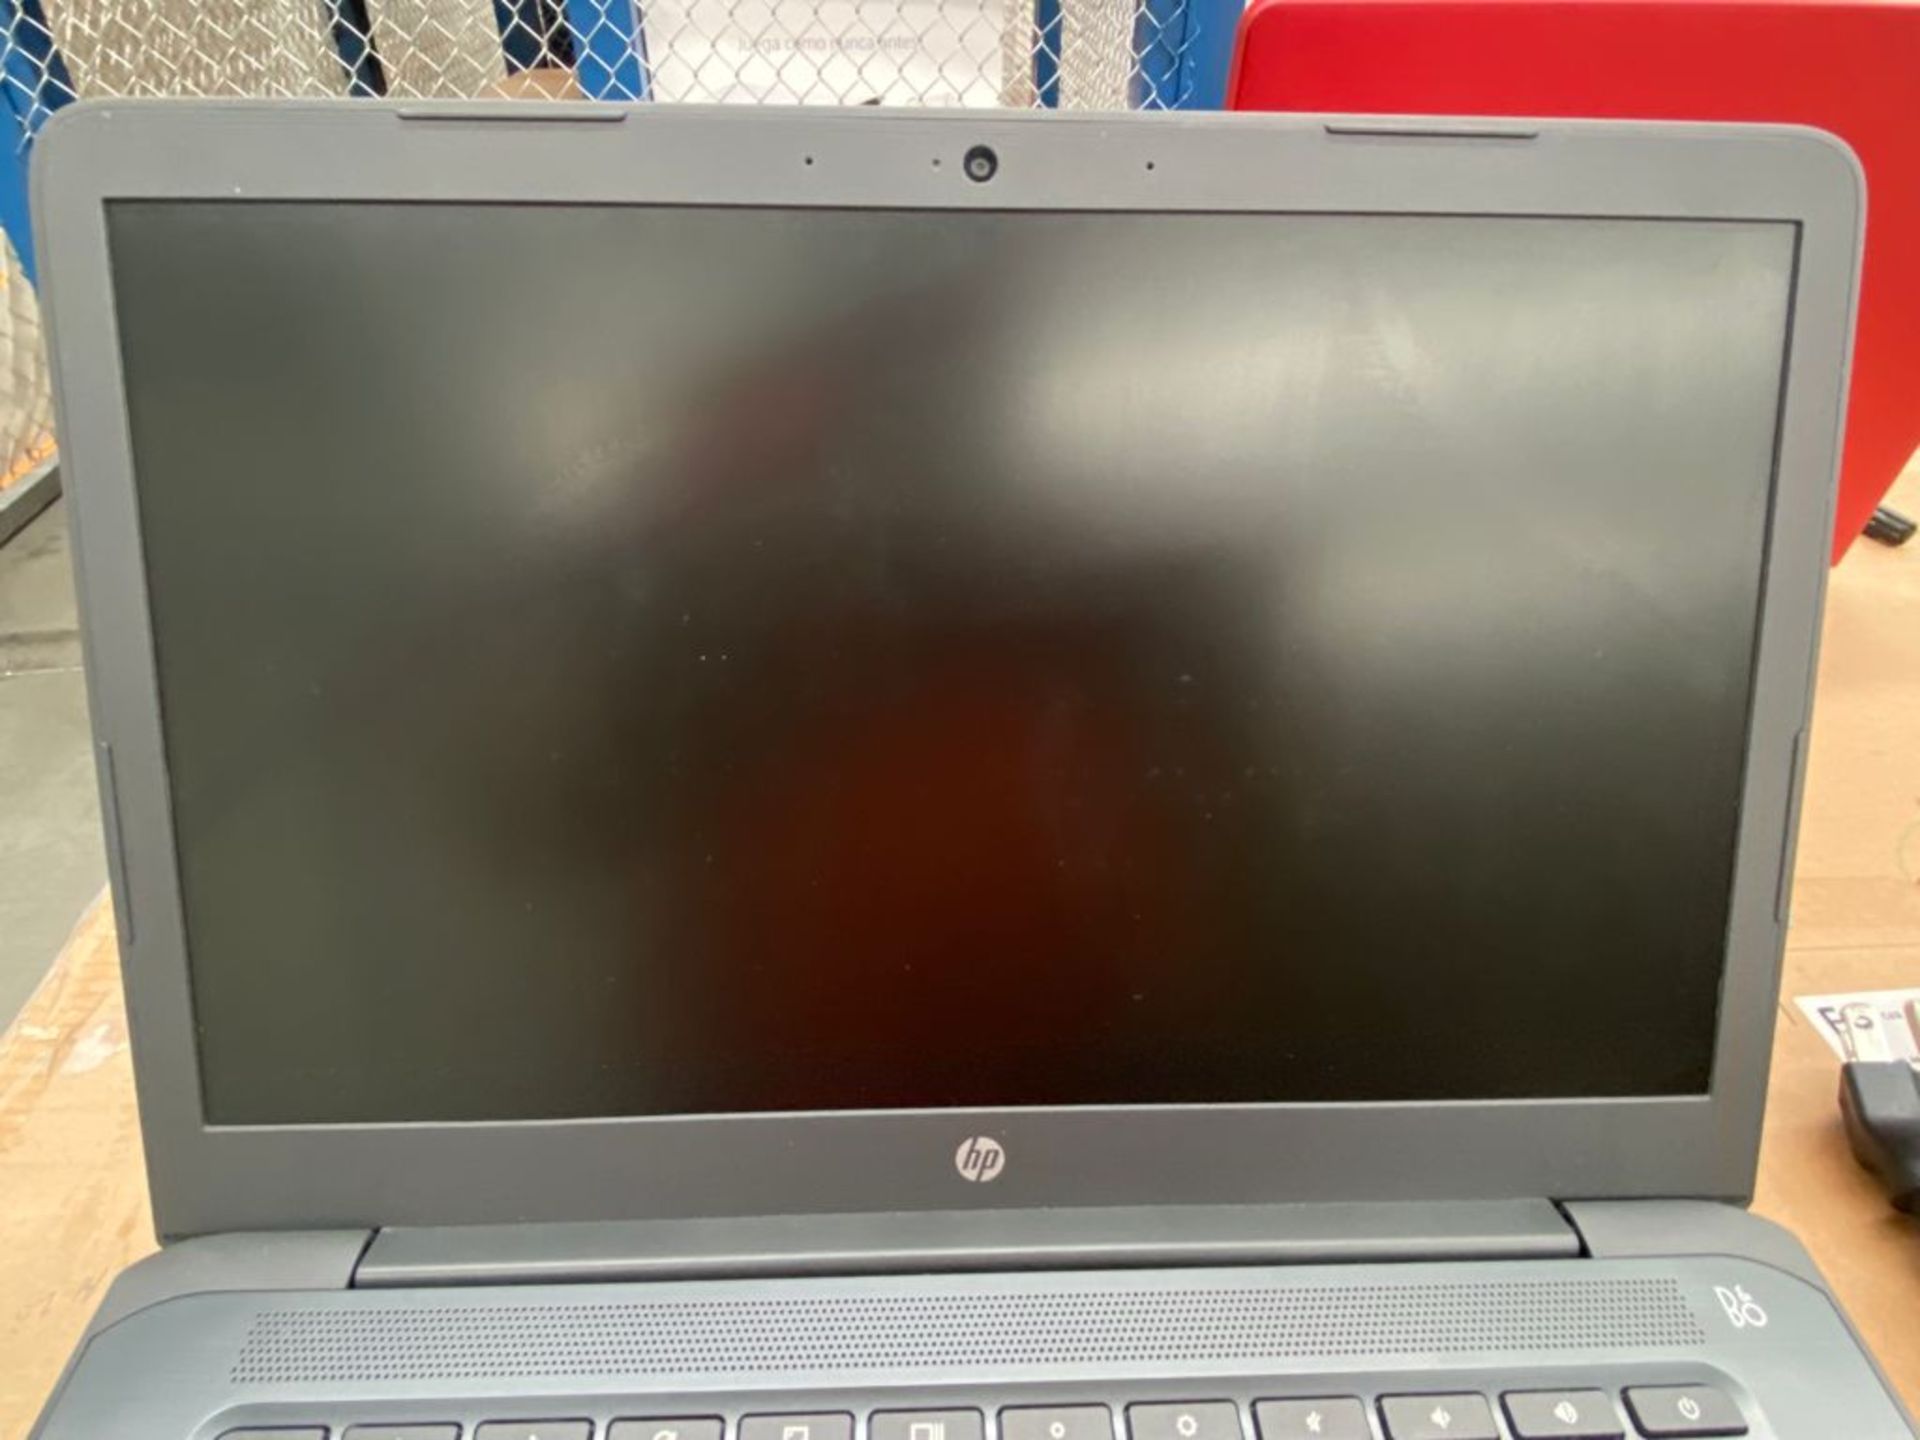 Laptop marca HP modelo Chromebook No de serie. 5CD94302R4 - Image 10 of 13